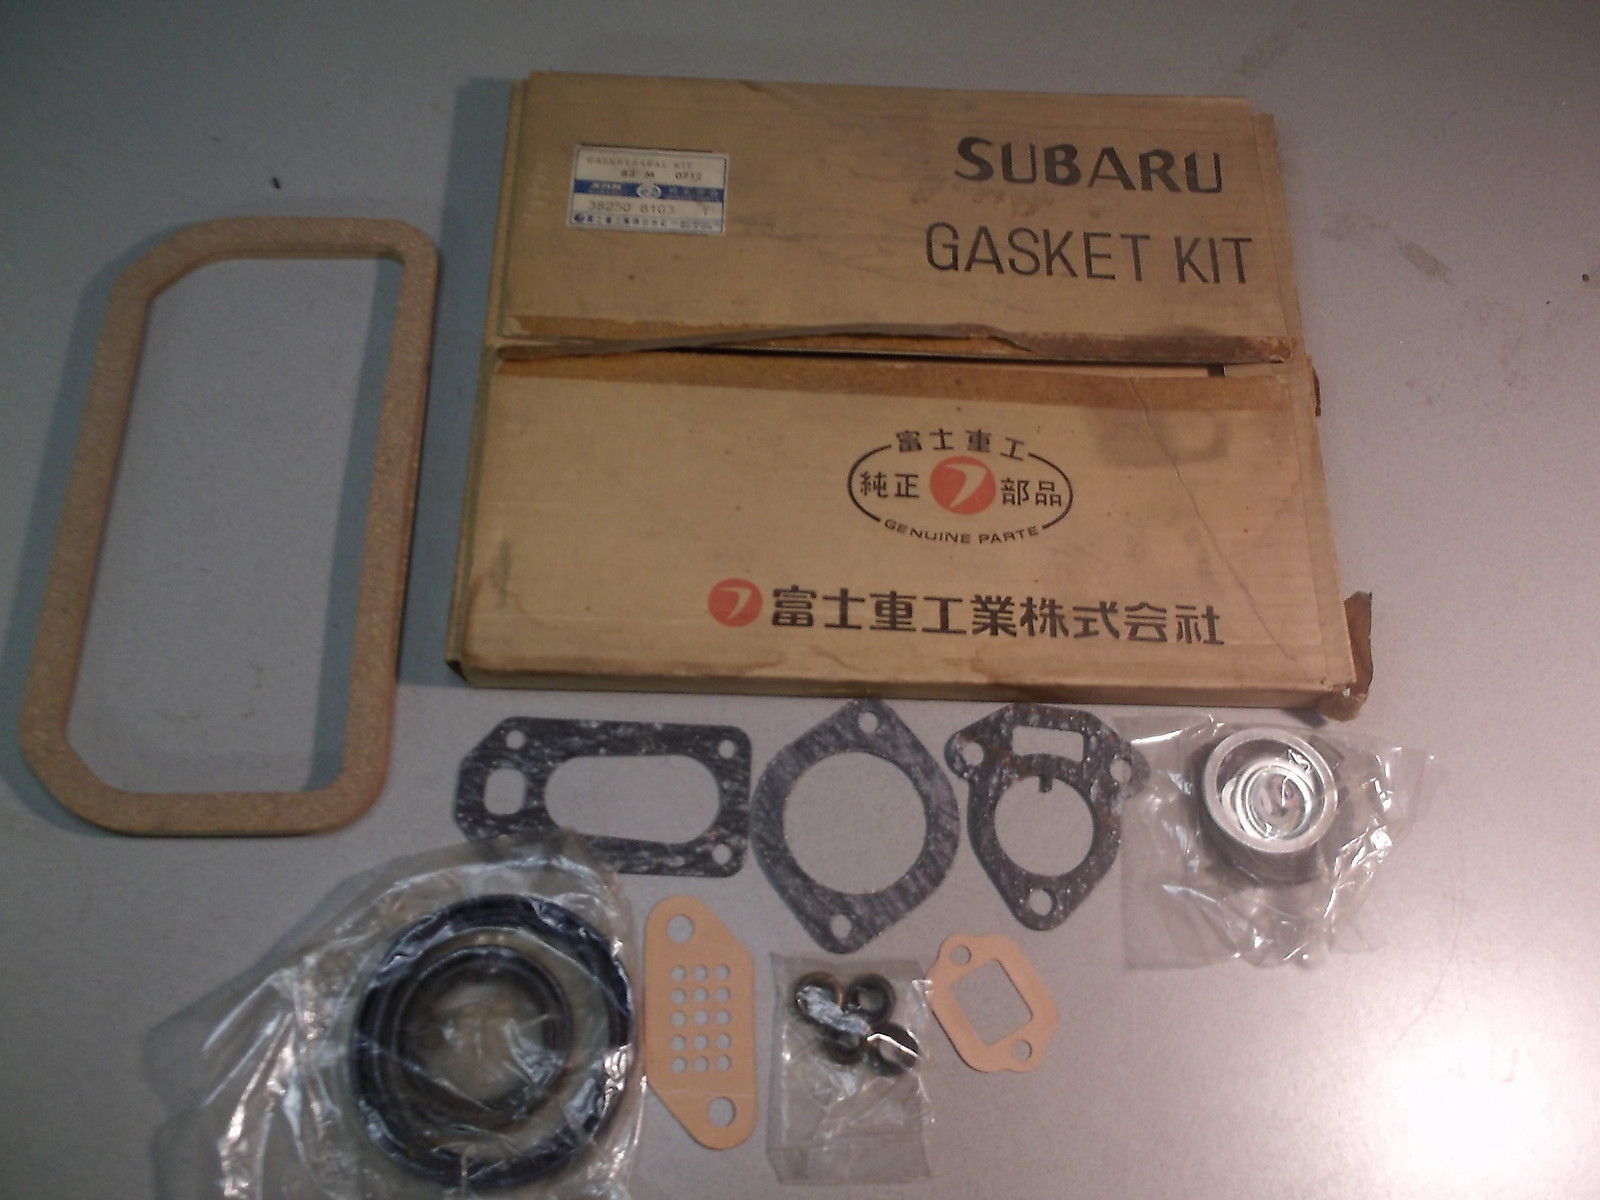 Subaru Chicago Mall Gasket Cheap mail order shopping Kit 38393 OEM SHIPPING 4800 FREE